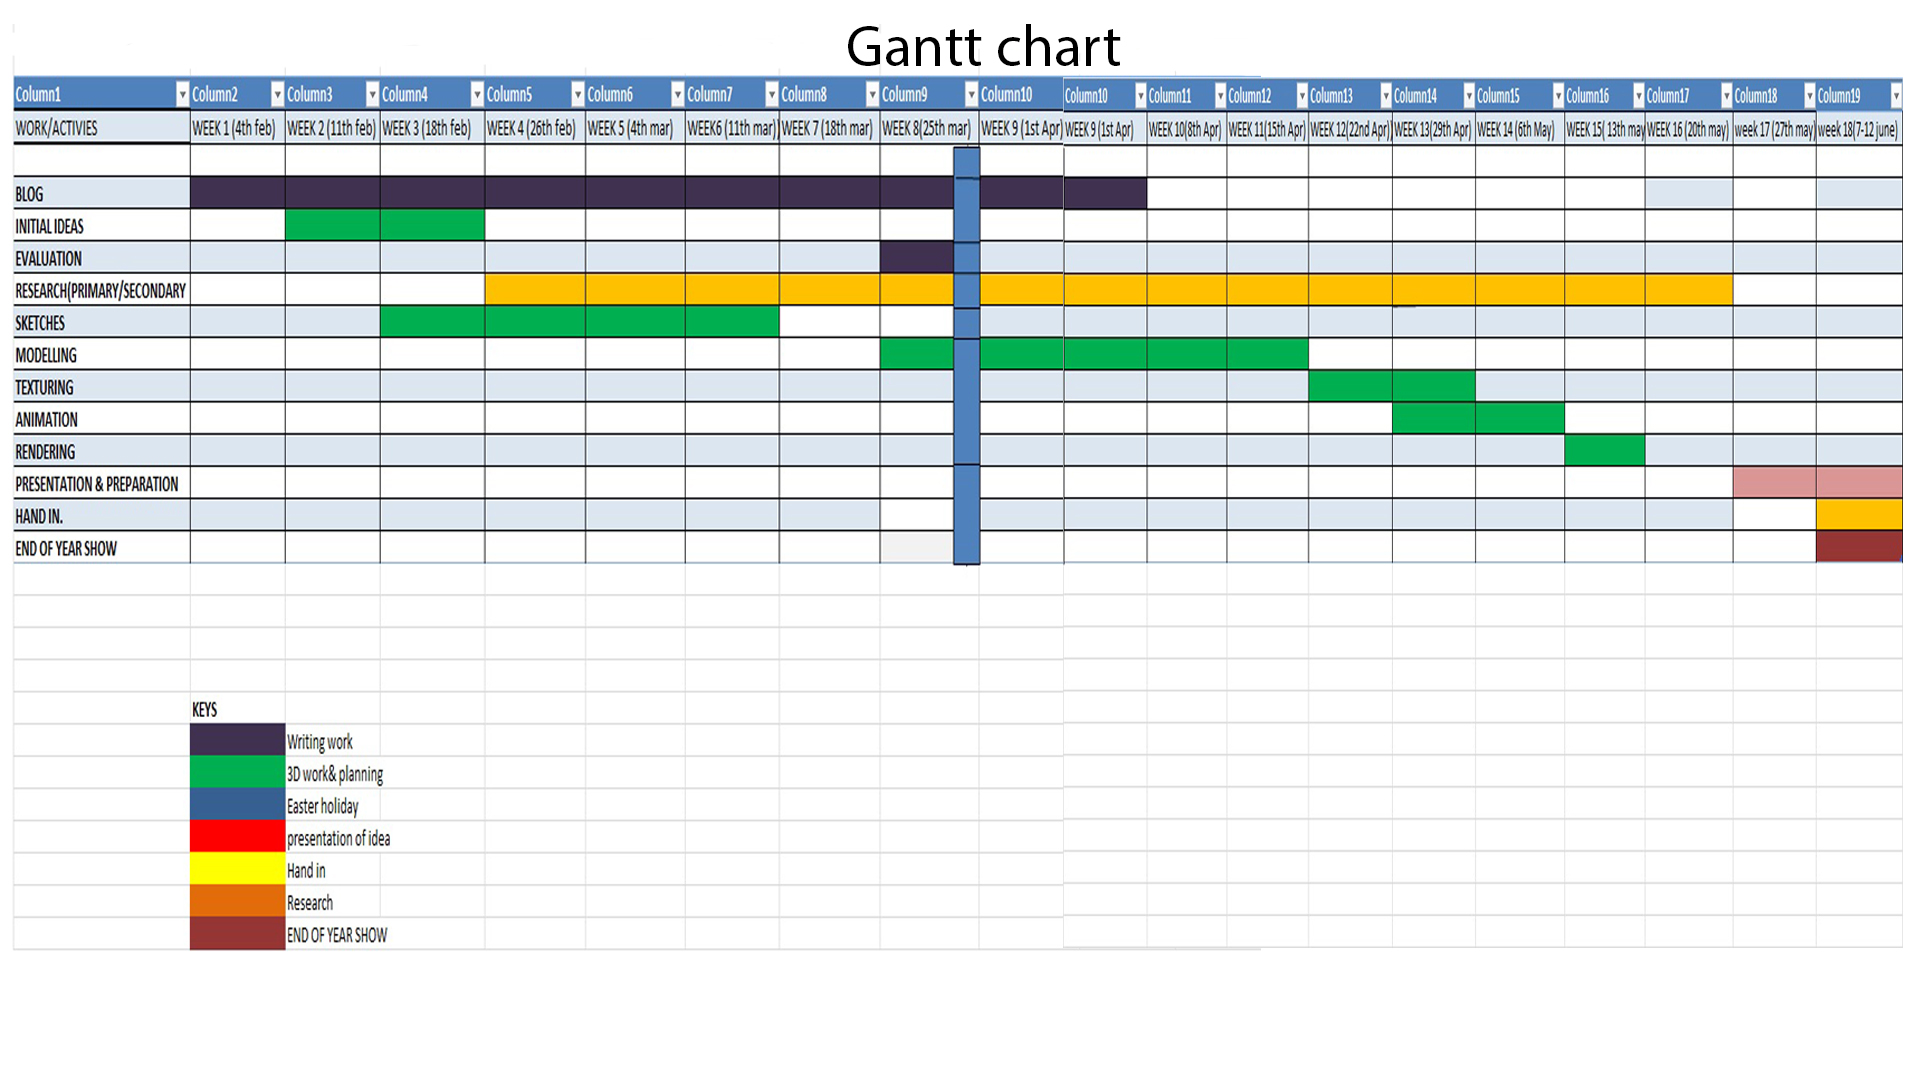 Gantt Progress Chart